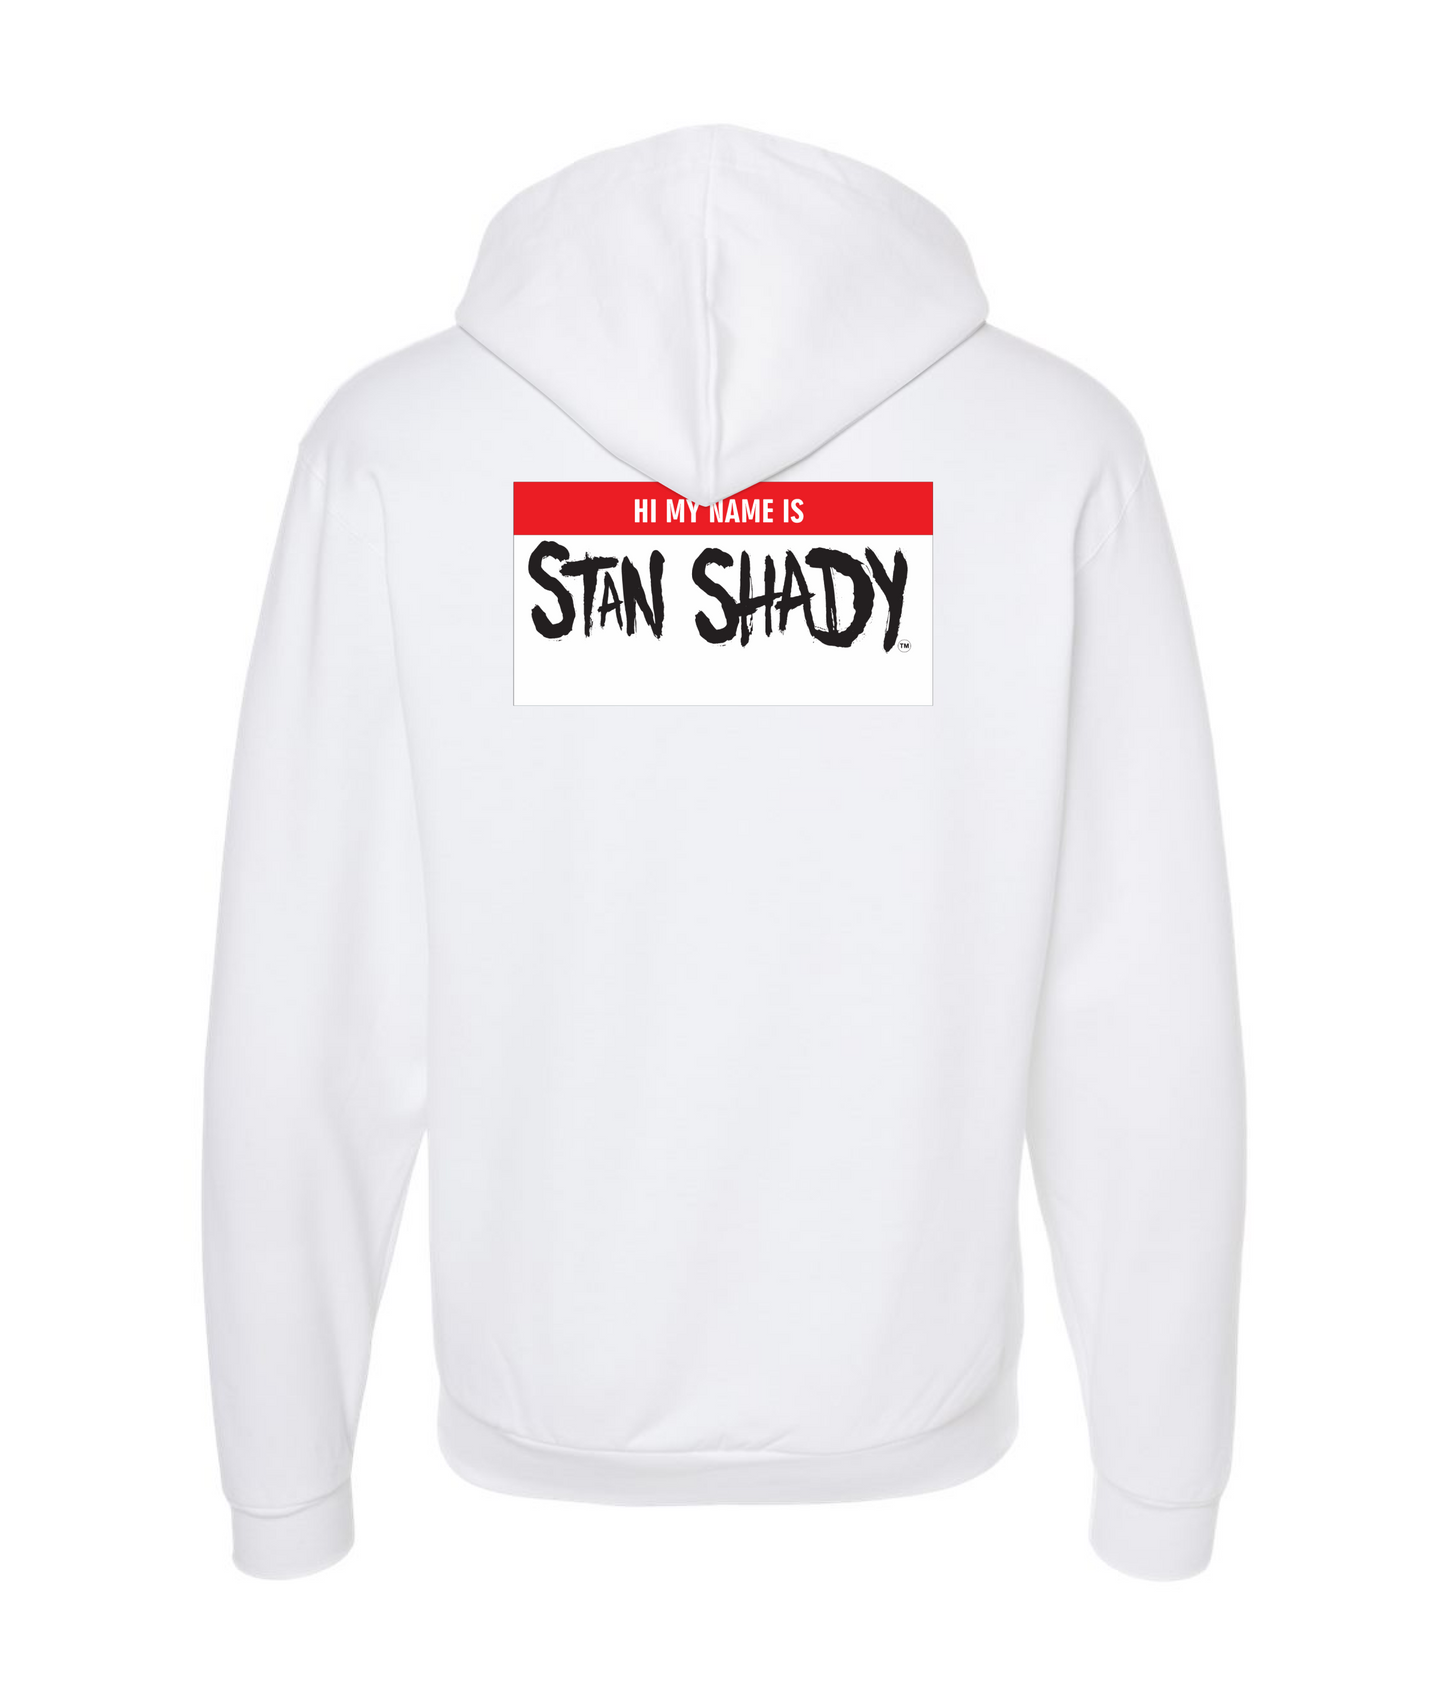 Stan Shady - Hi My Name Is (2 Sided) - White Zip Hoodie